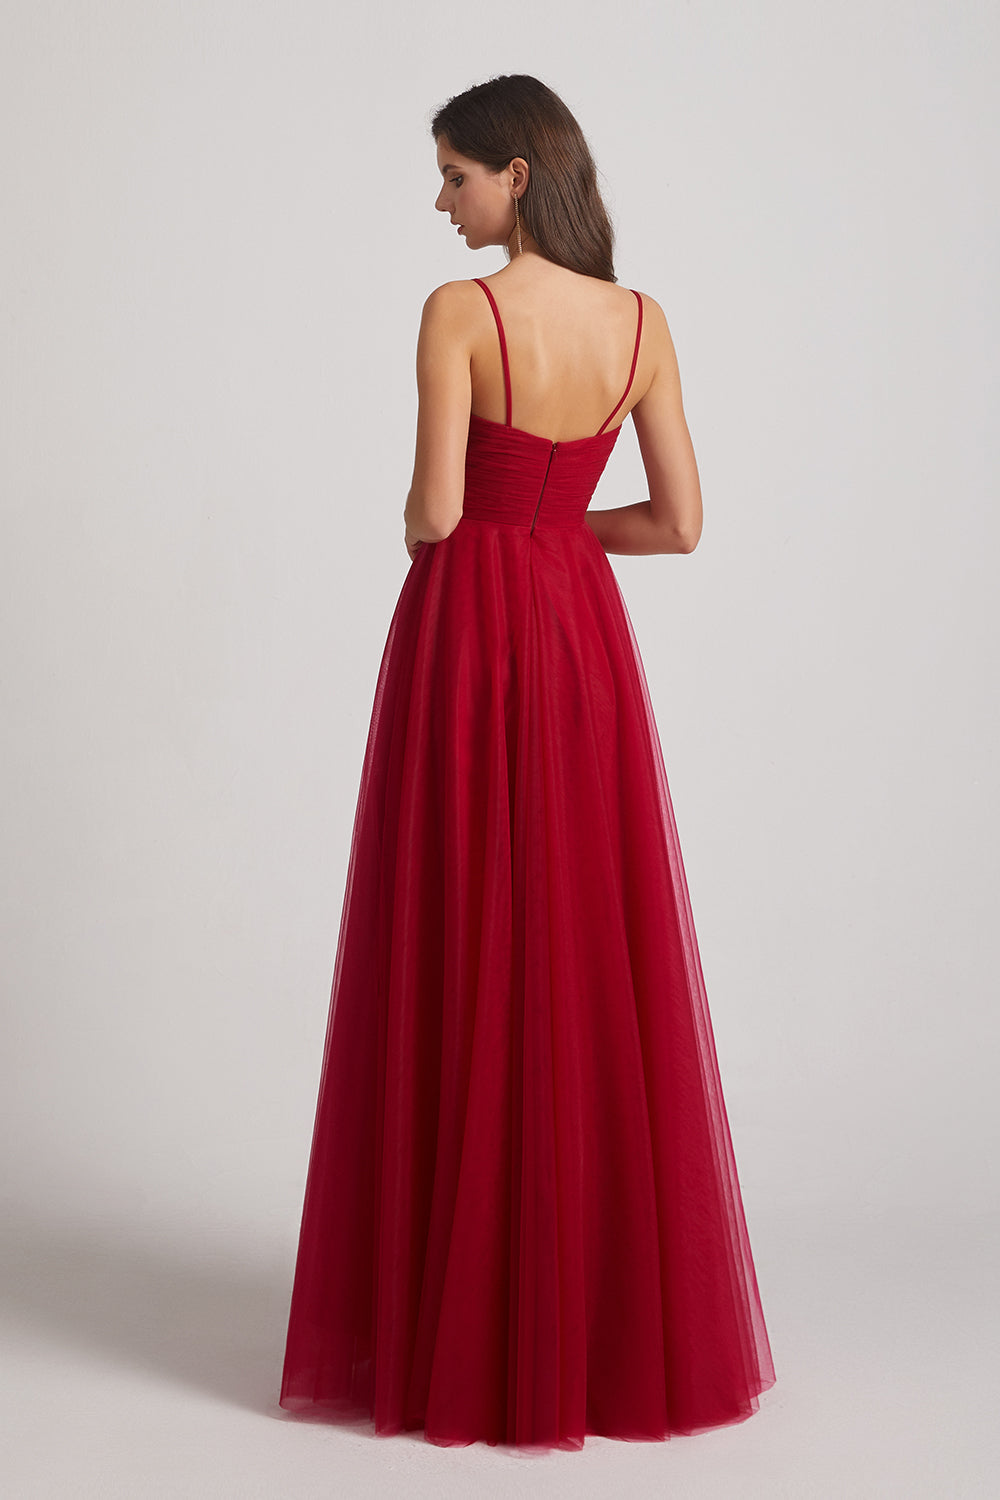 dark red tulle prom dresses